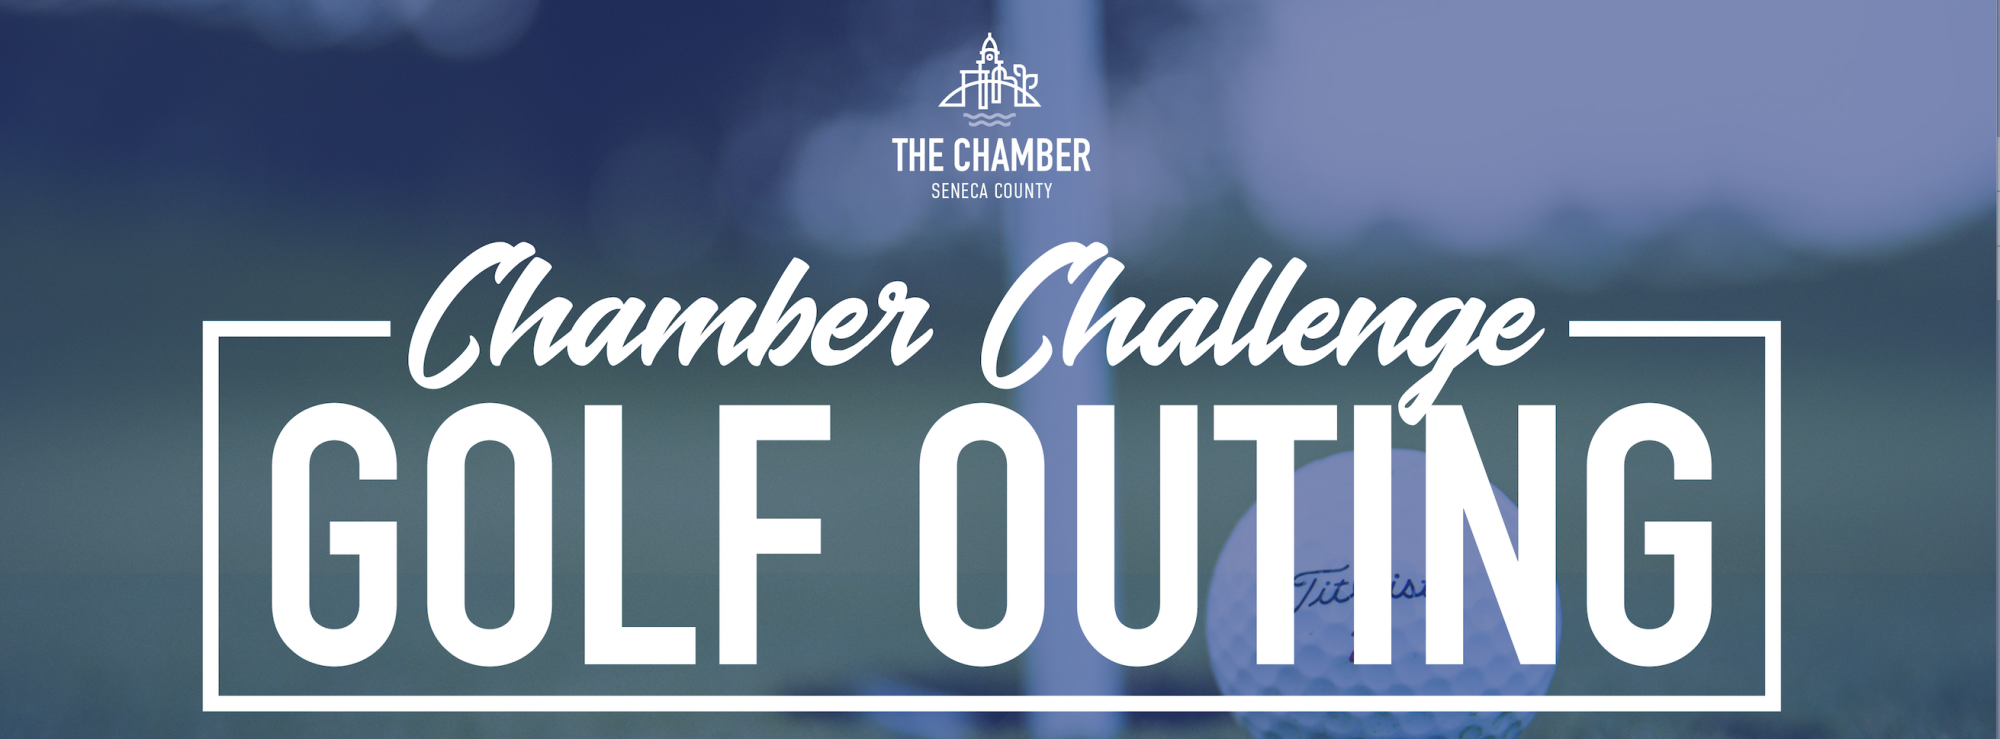 Chamber Challenge 2021 Recap 